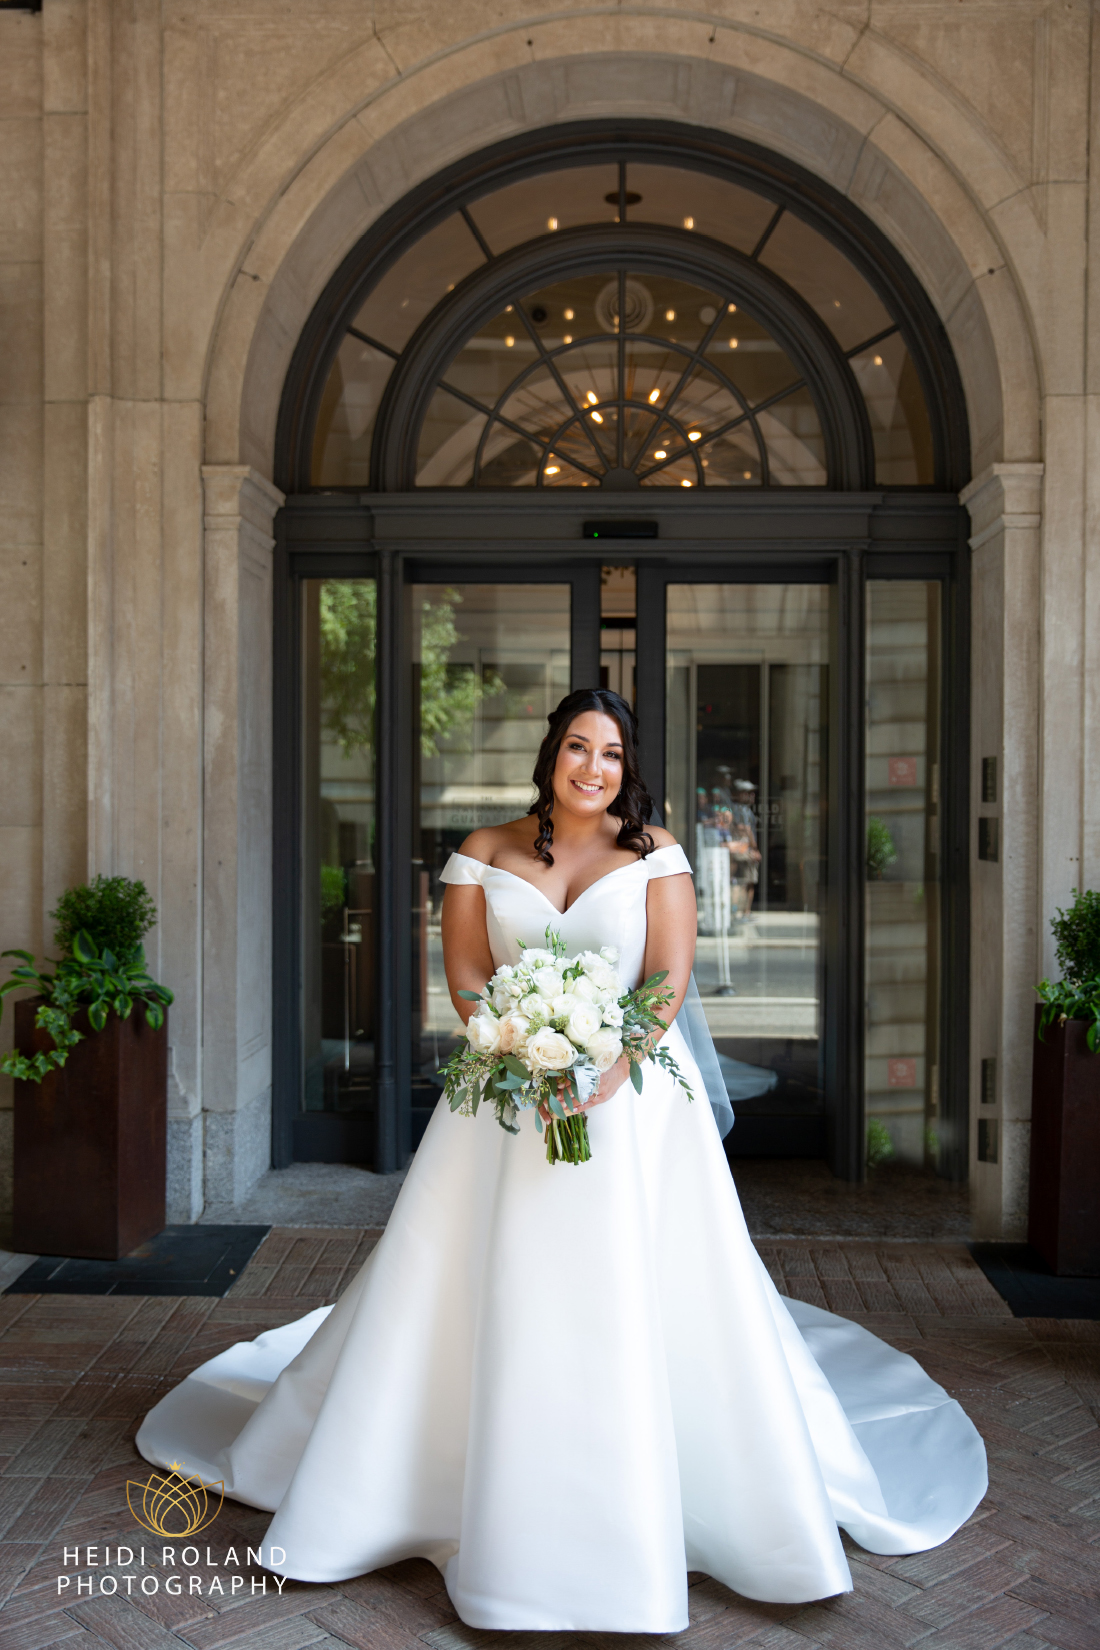 Bride outside philadelphia hotel in wedding dress with flowers